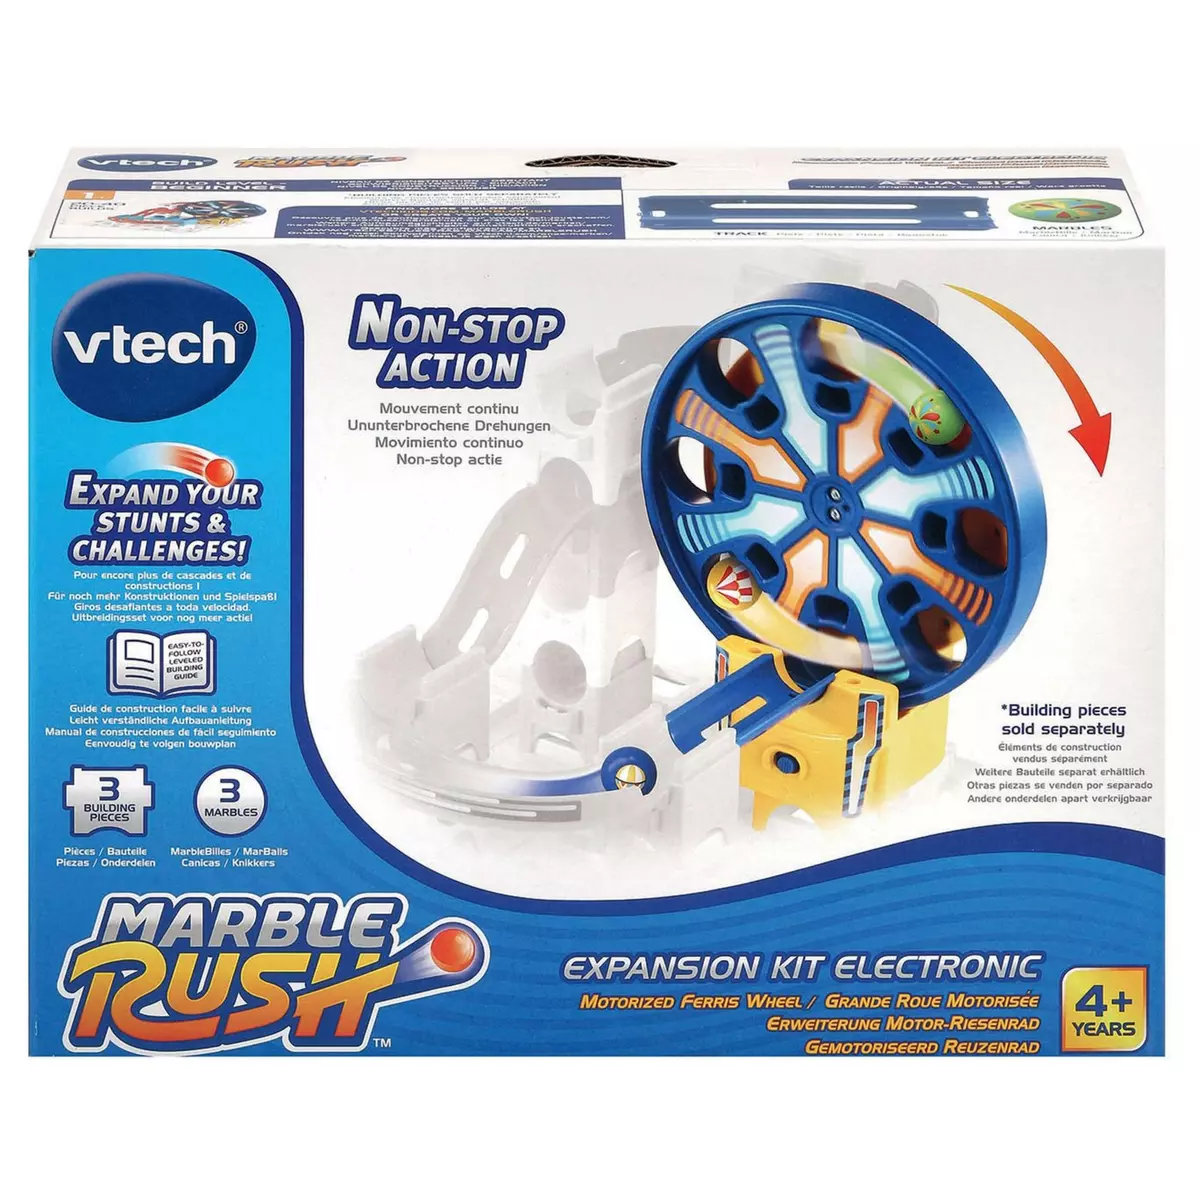 VTECH Marble Rush Expansion Kit electronic Grande roue motorisée